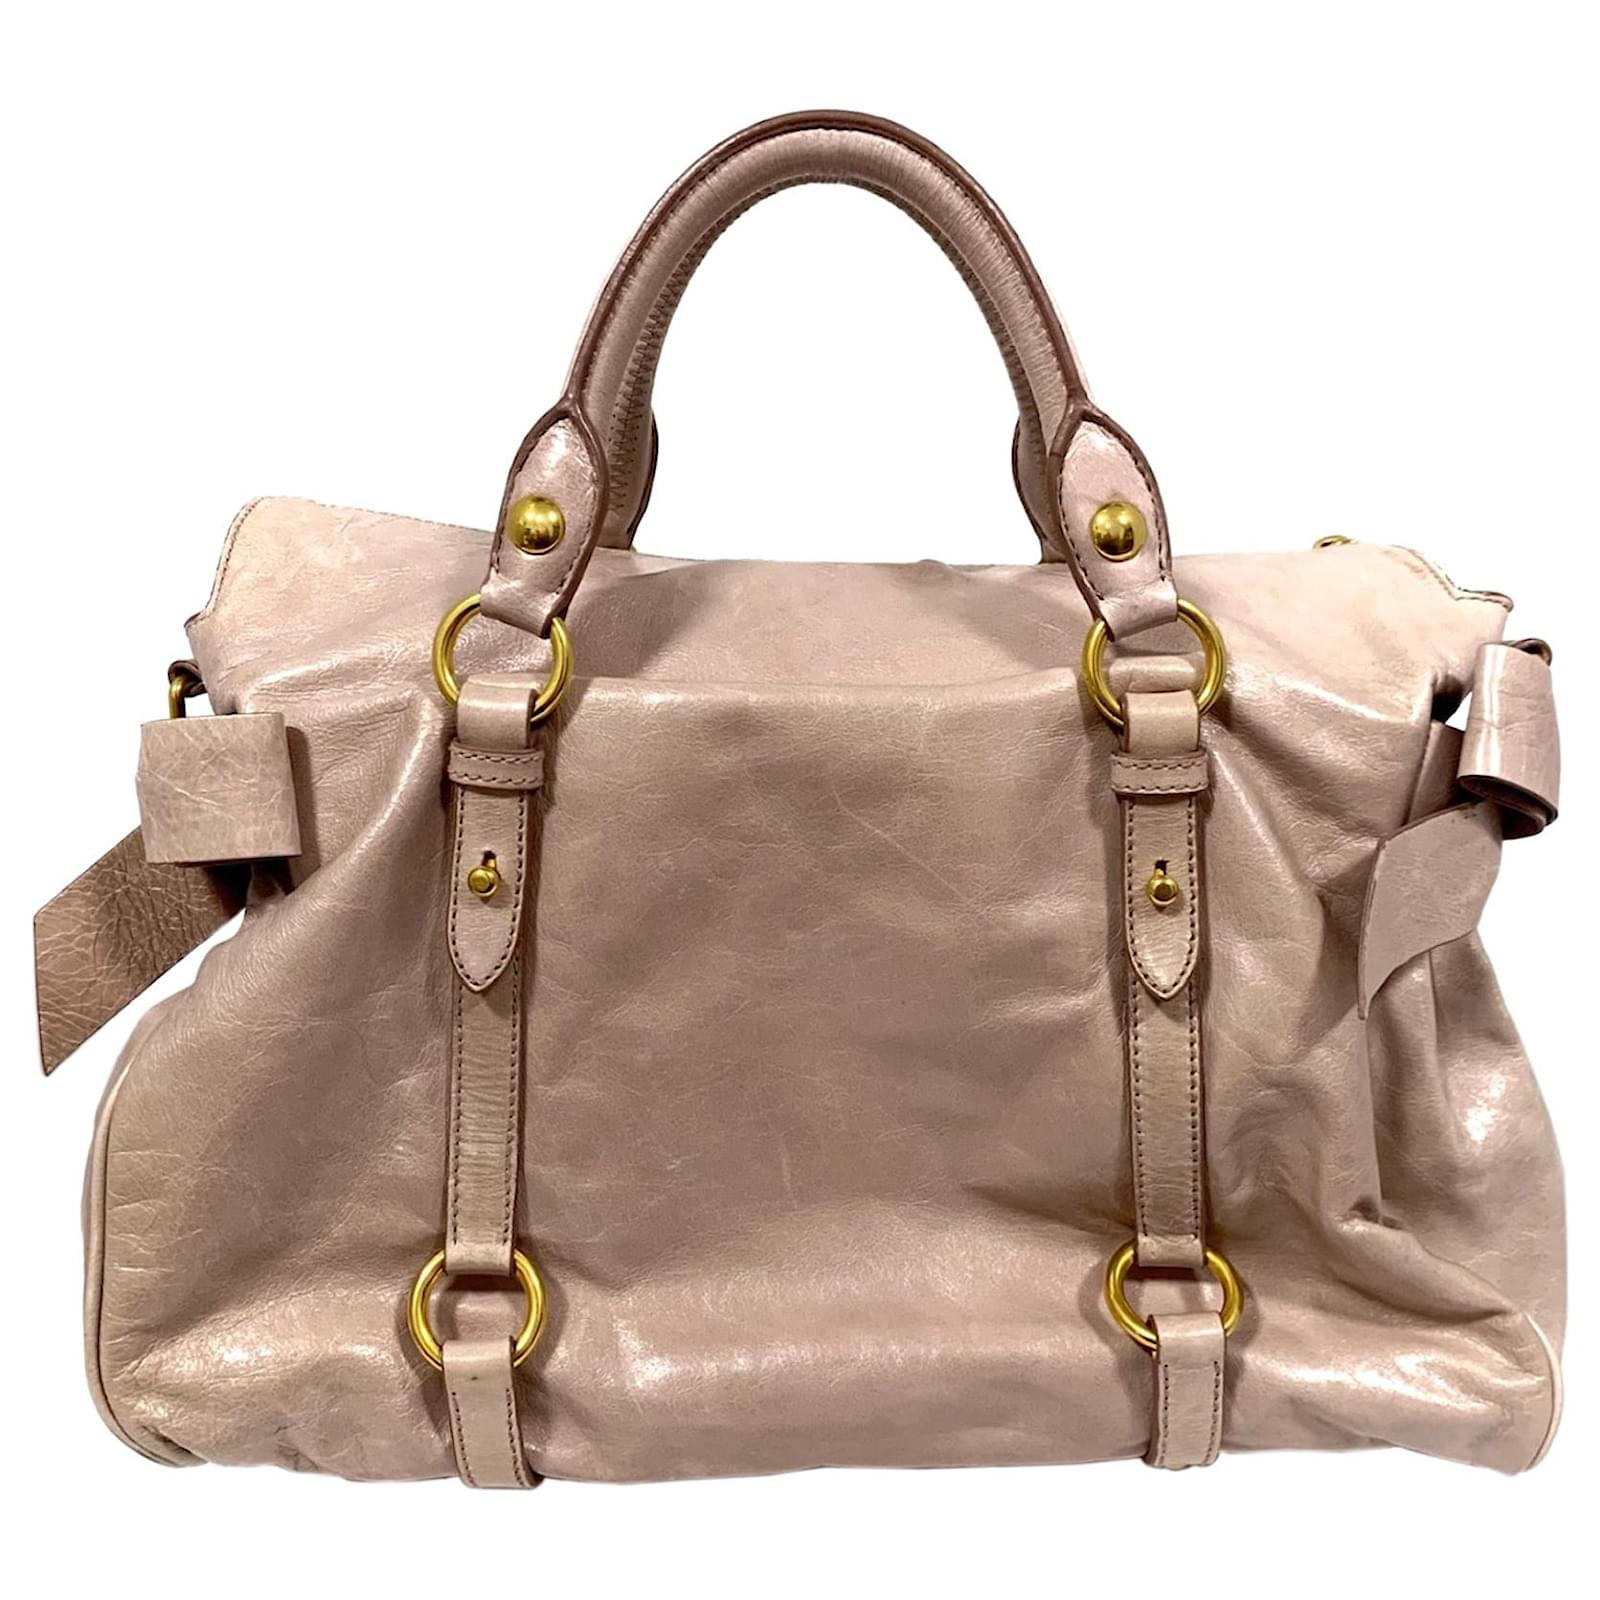 Miu Miu Vitello Lux Gathered Leather Handbag Pink Pony-style